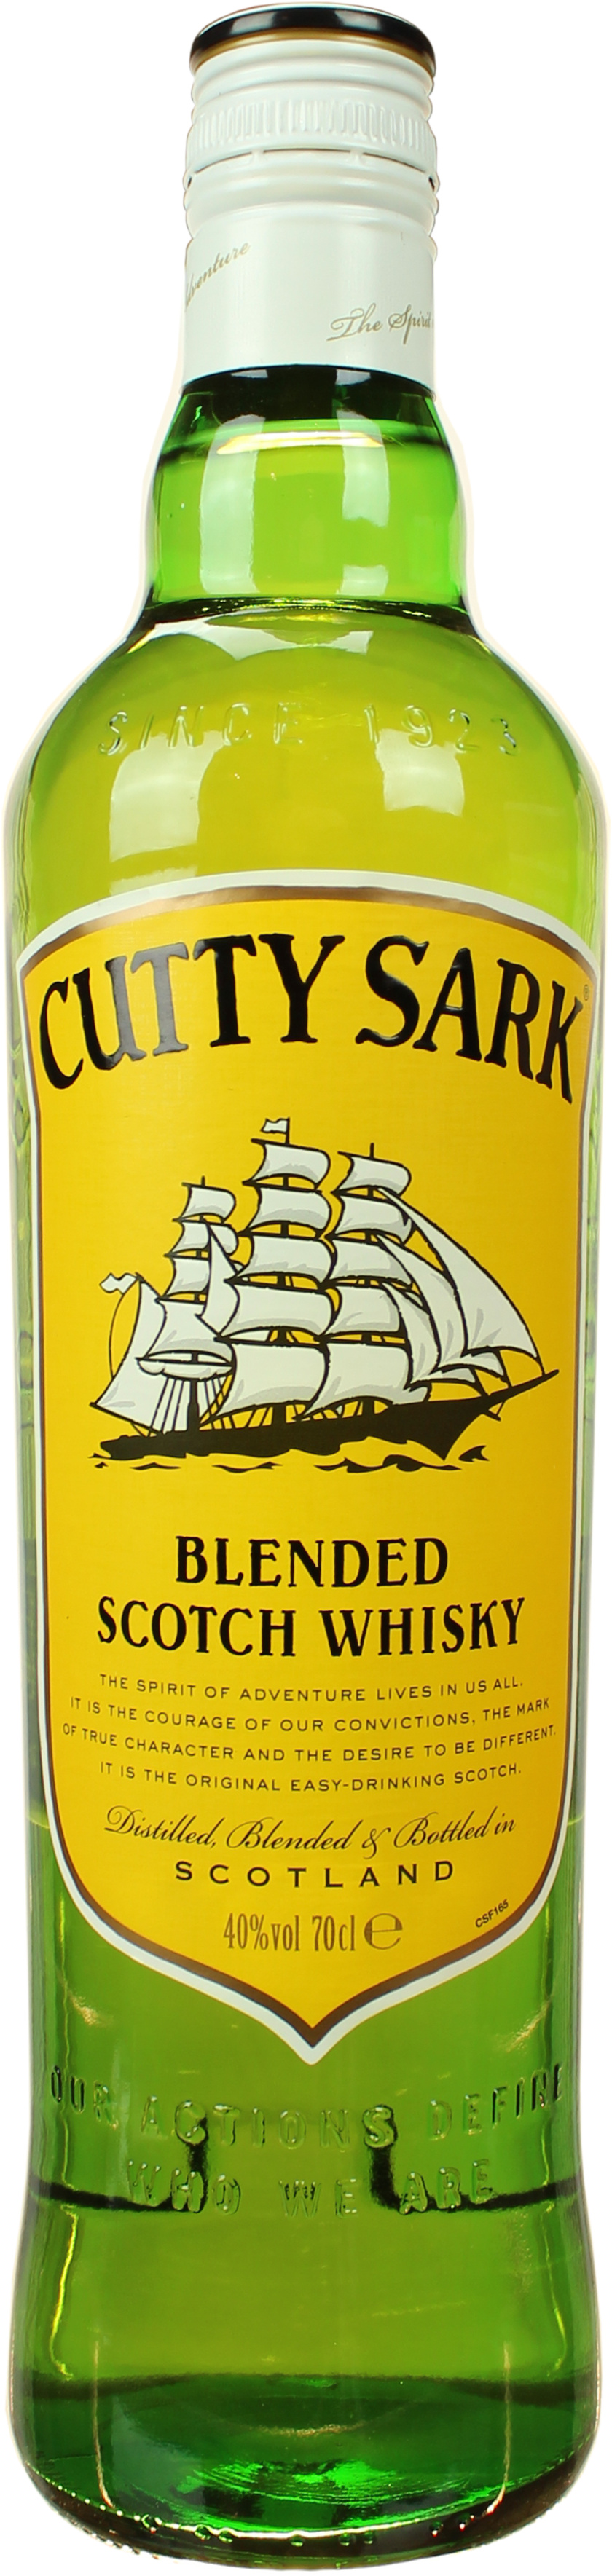 Cutty Sark 40.0% 0,7l